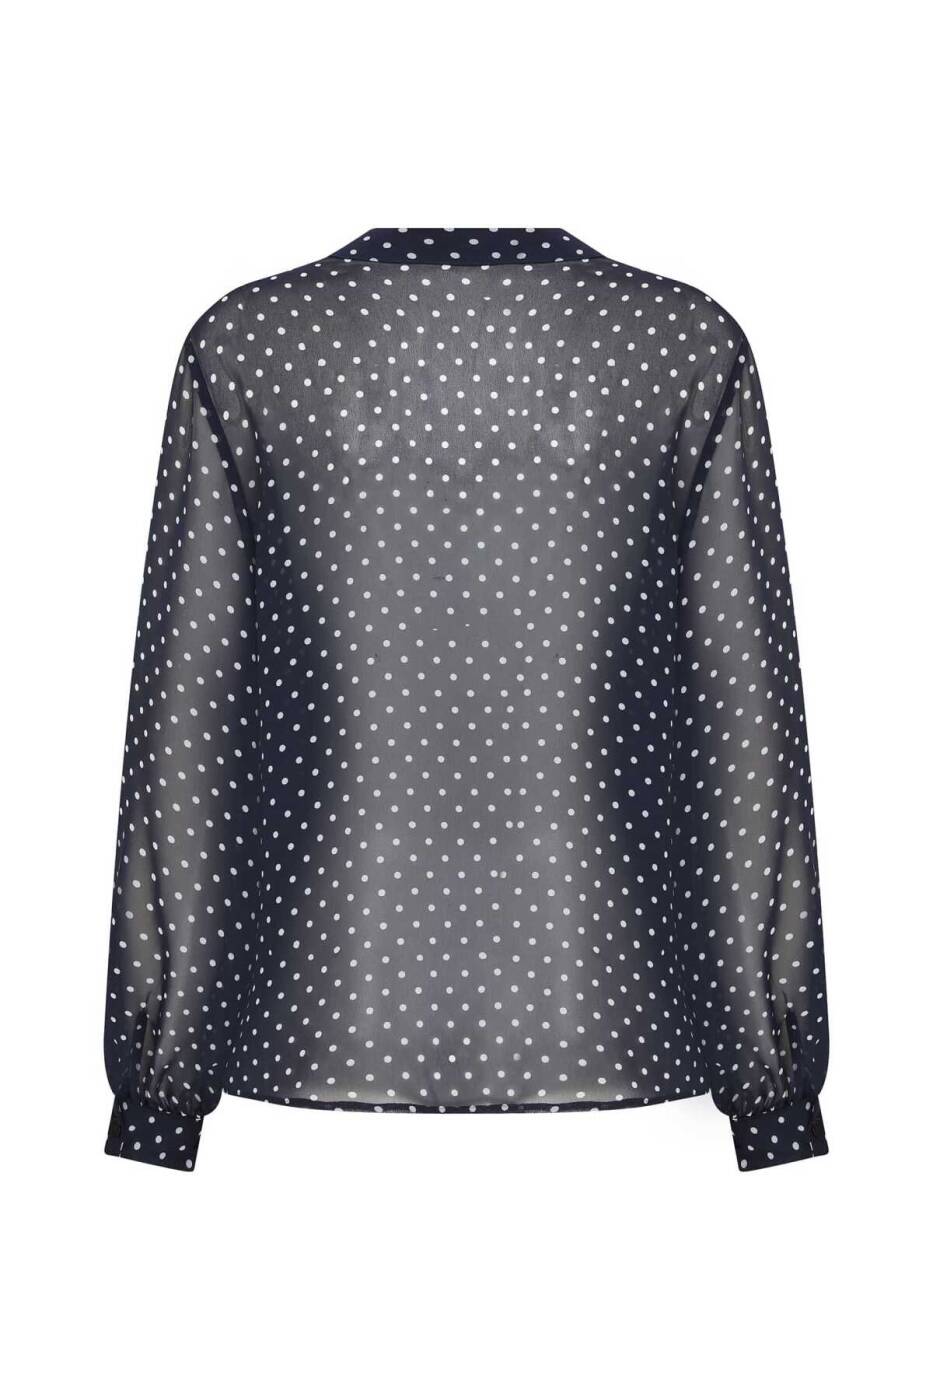  Puantiyeli Transparan Bluz Standart Renk - 5